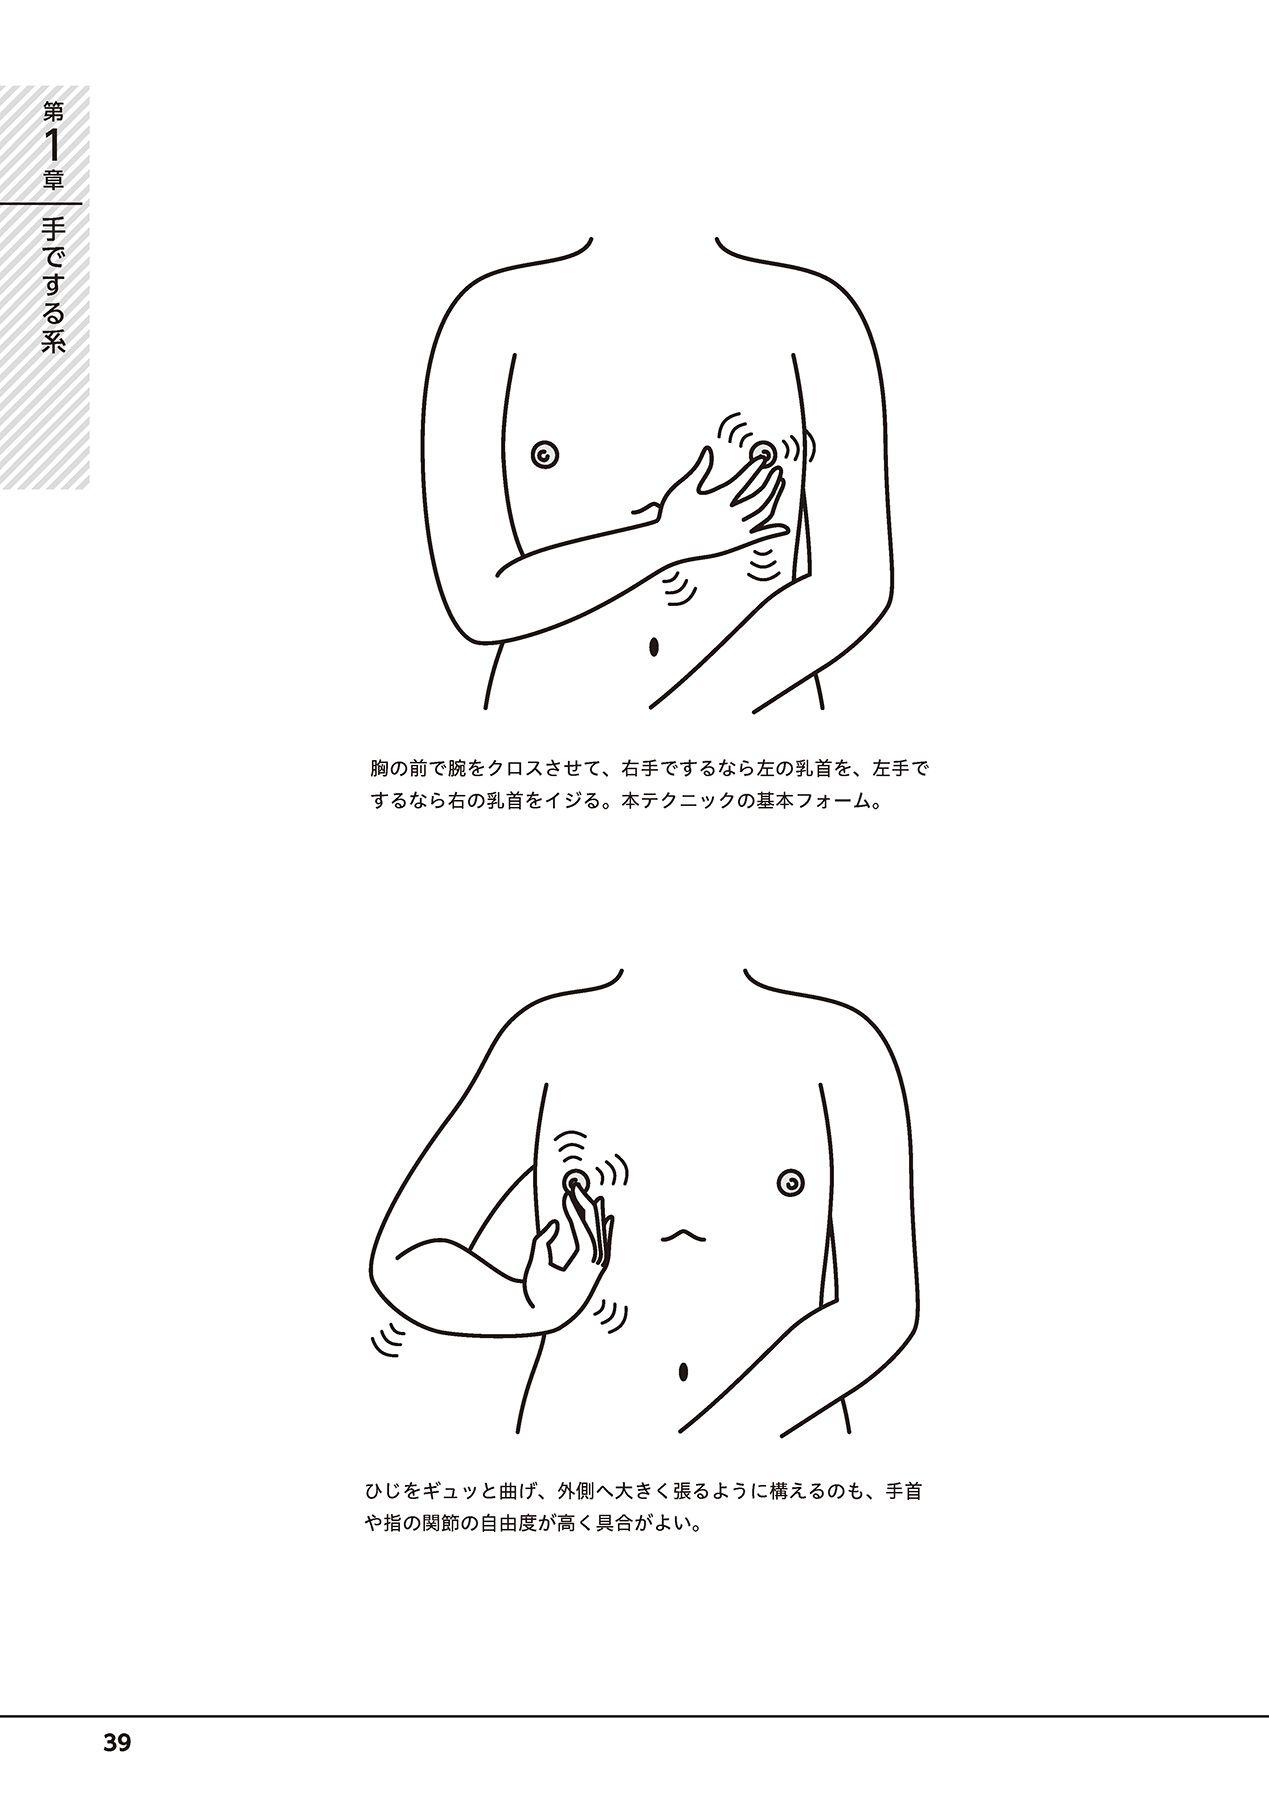 Otoko no Jii Onanie Kanzen Manual Illustration Han...... Onanie Play 40